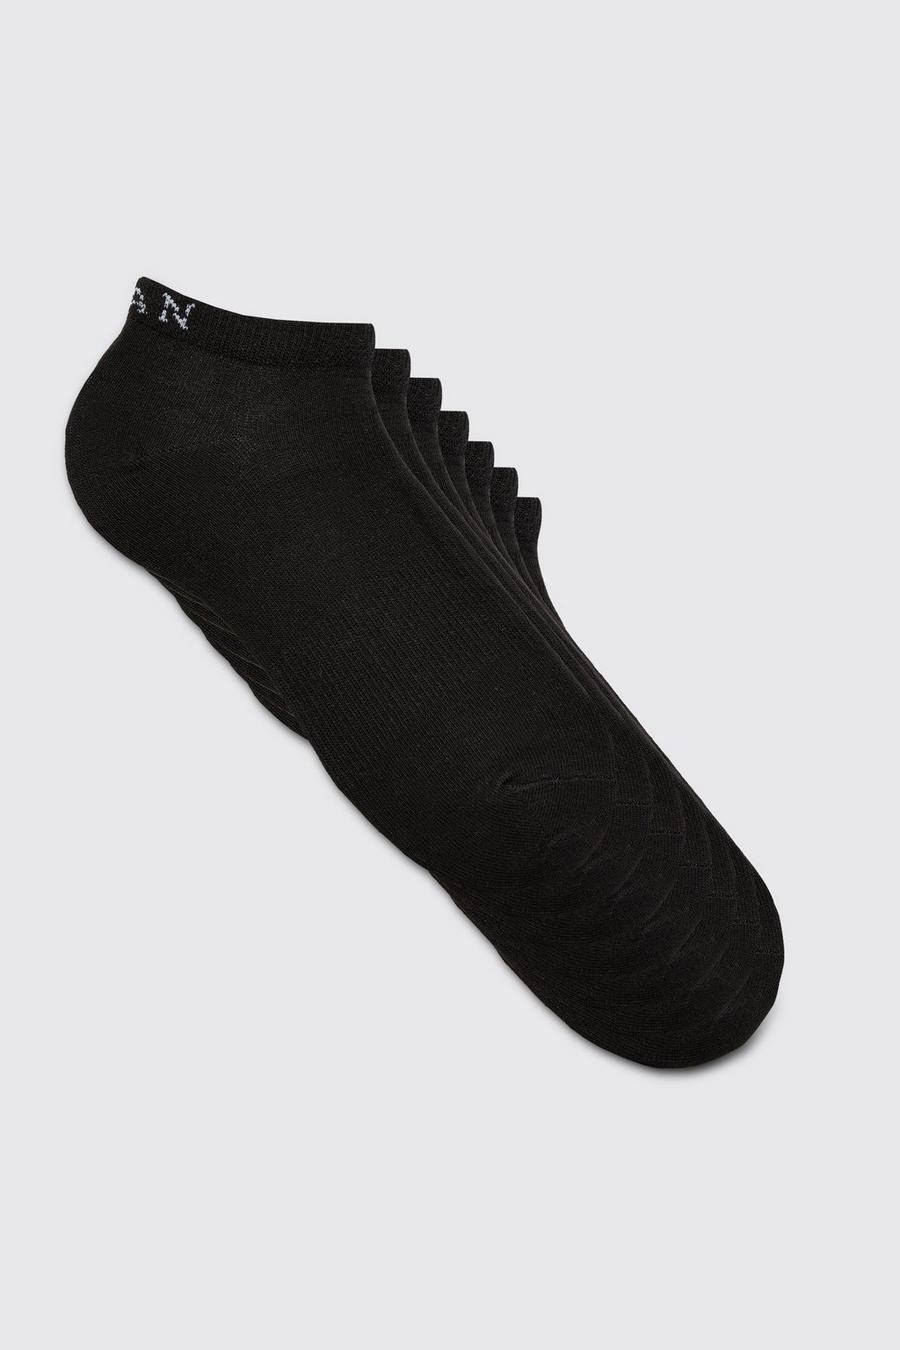 Pack de 7 pares de calcetines MAN deportivos, Black negro